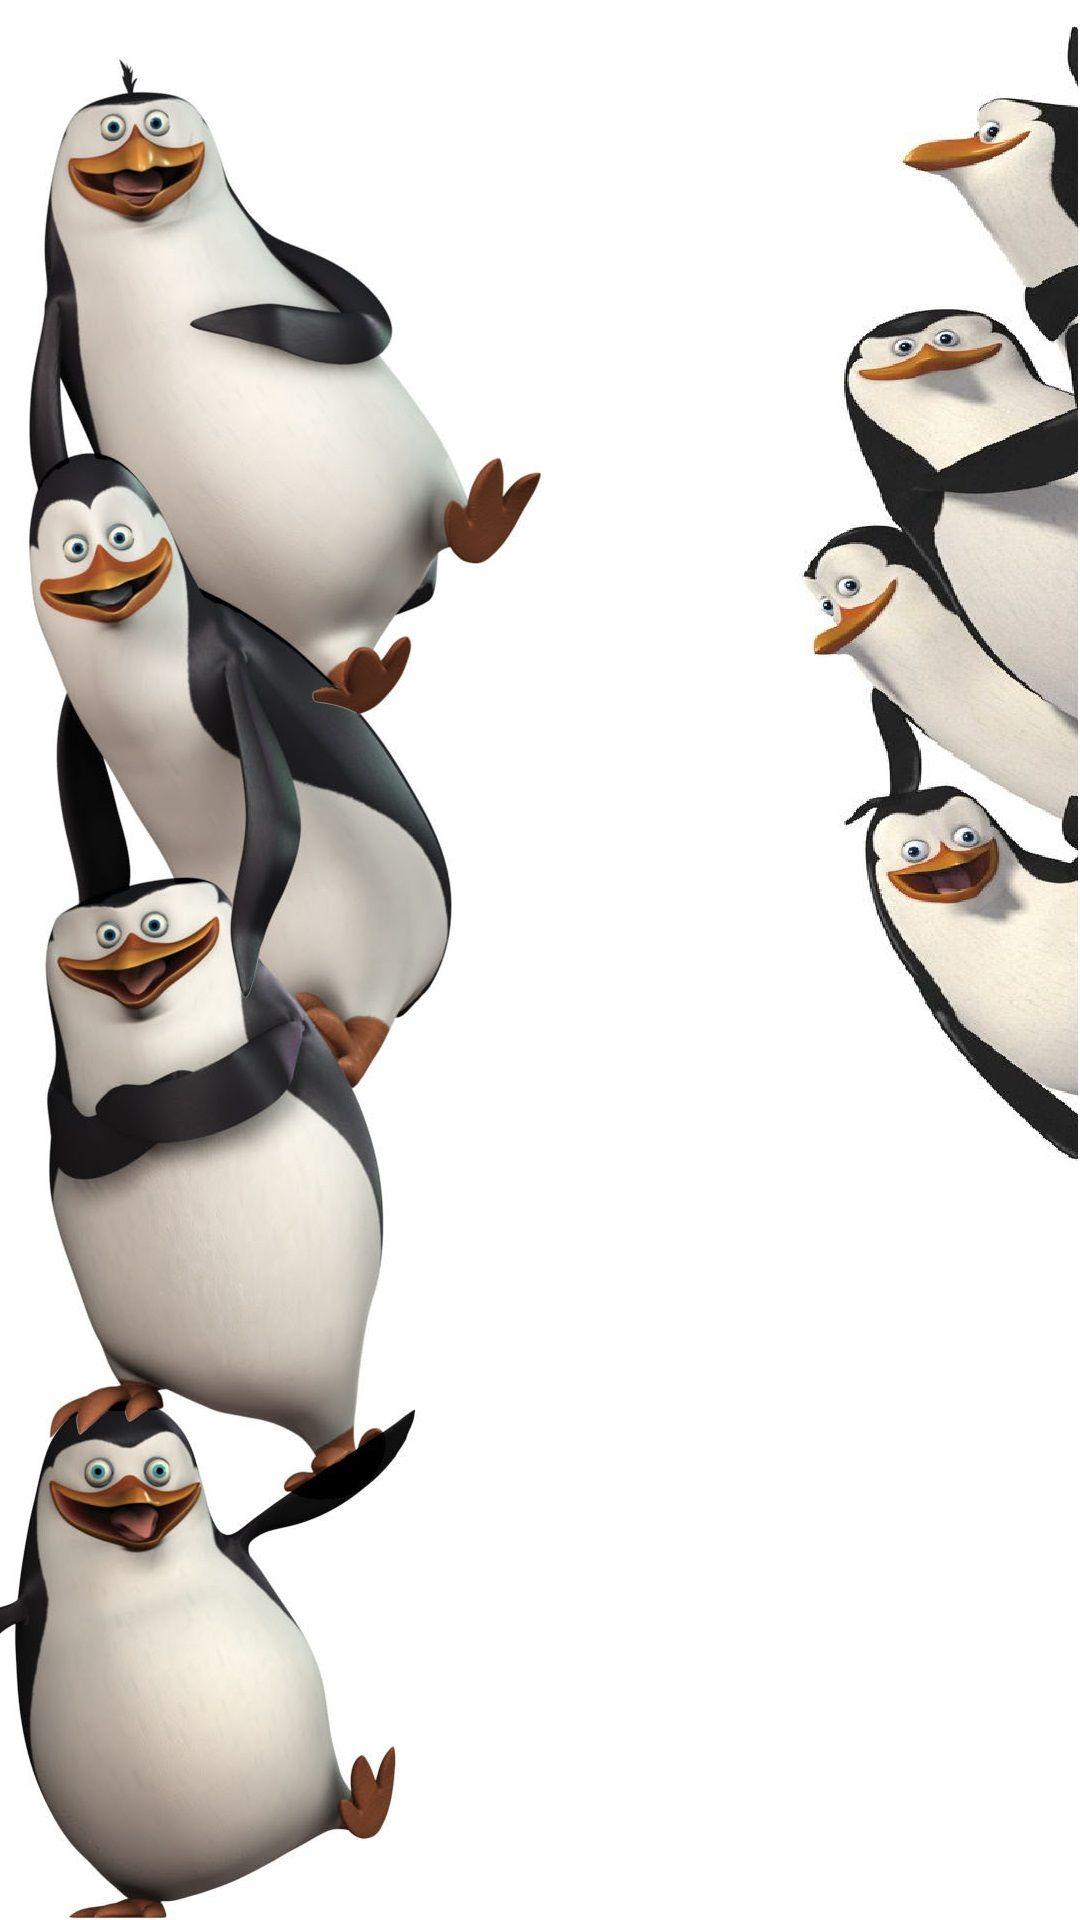 penguins of madagascar mobile wallpaper 1080x1920